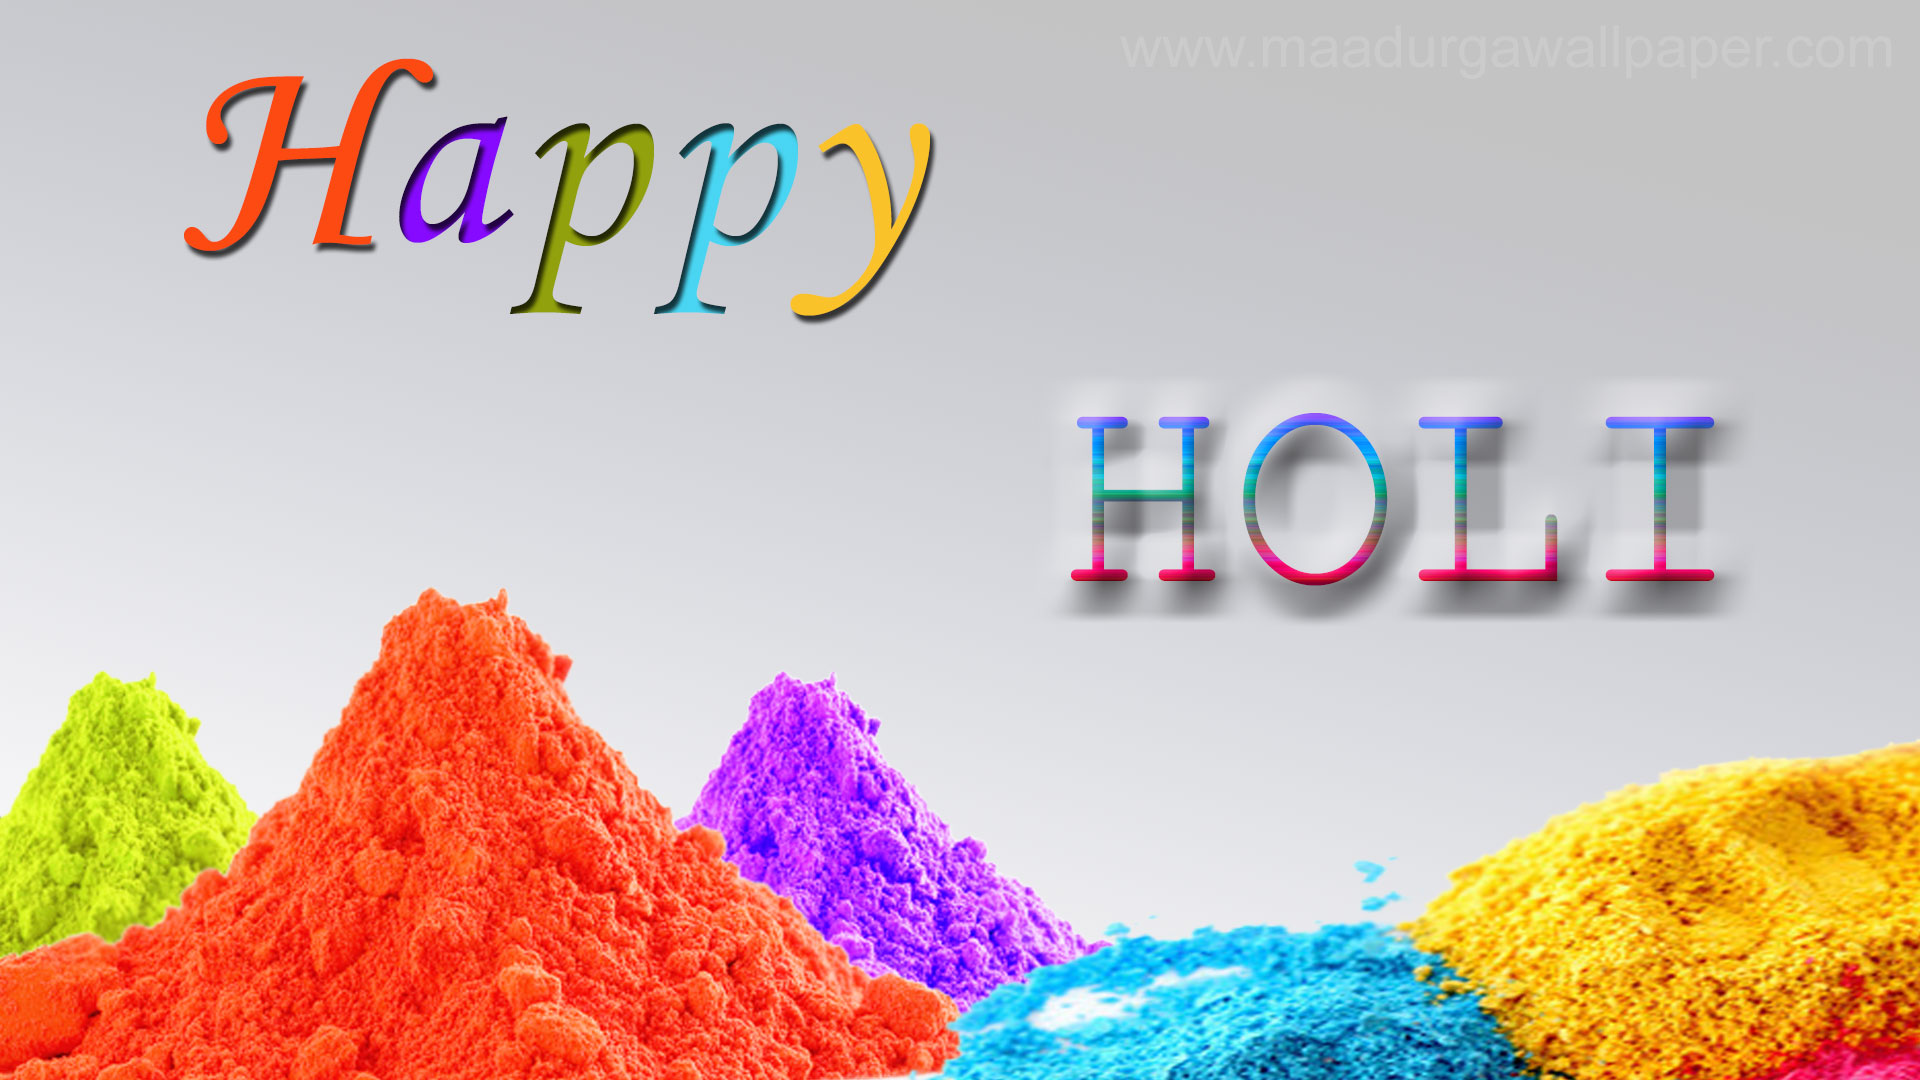 Happy Holi Image HD Wallpaper For Whatsapp Dp Fb